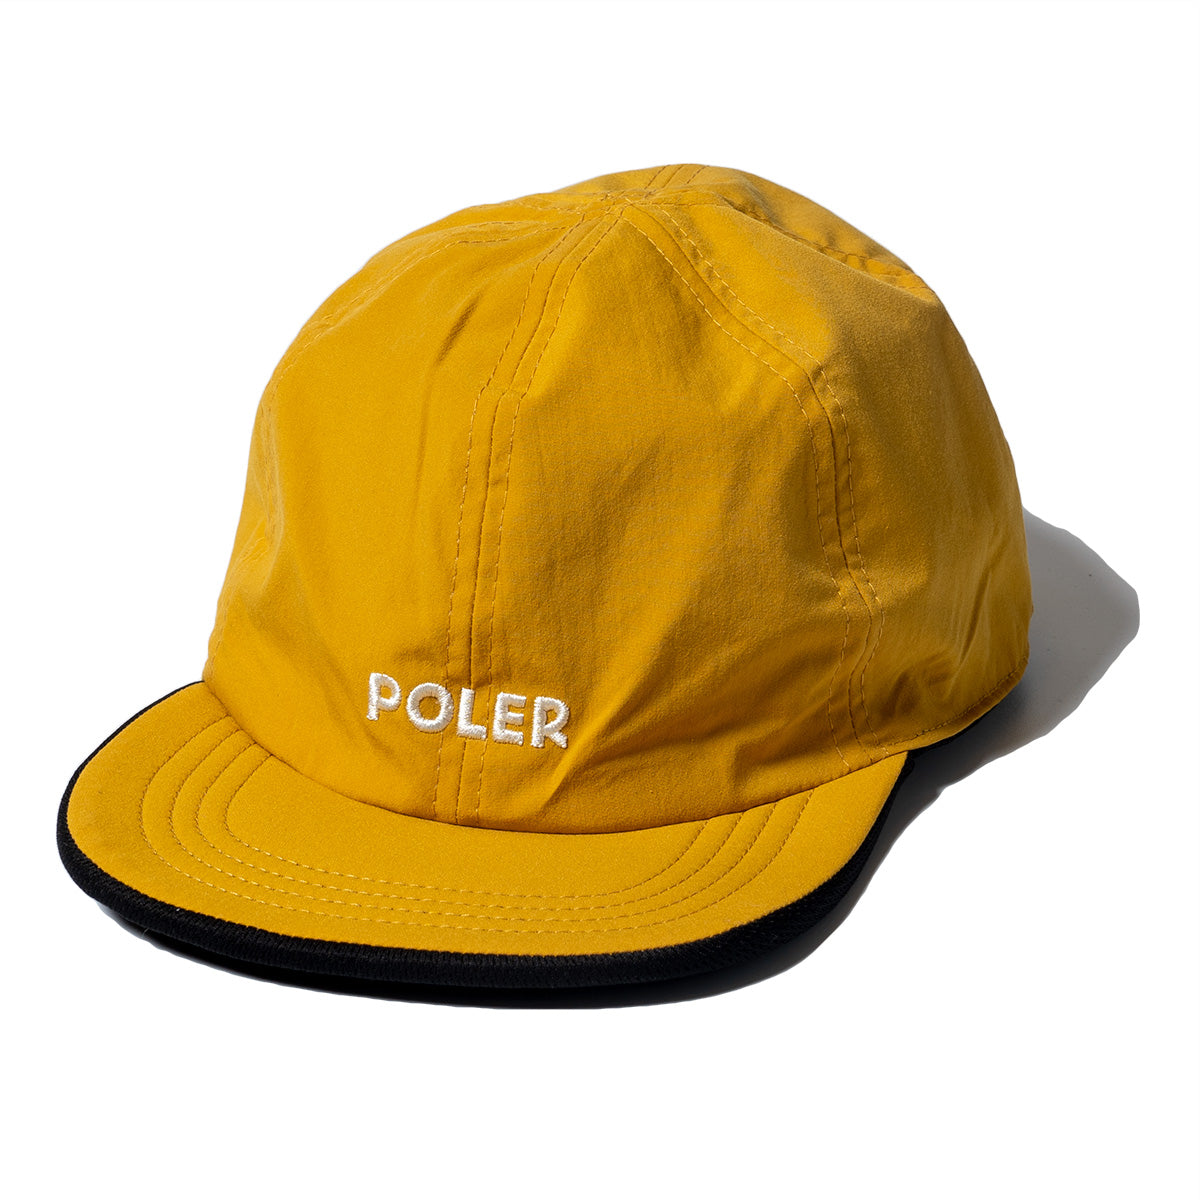 POLeR cap